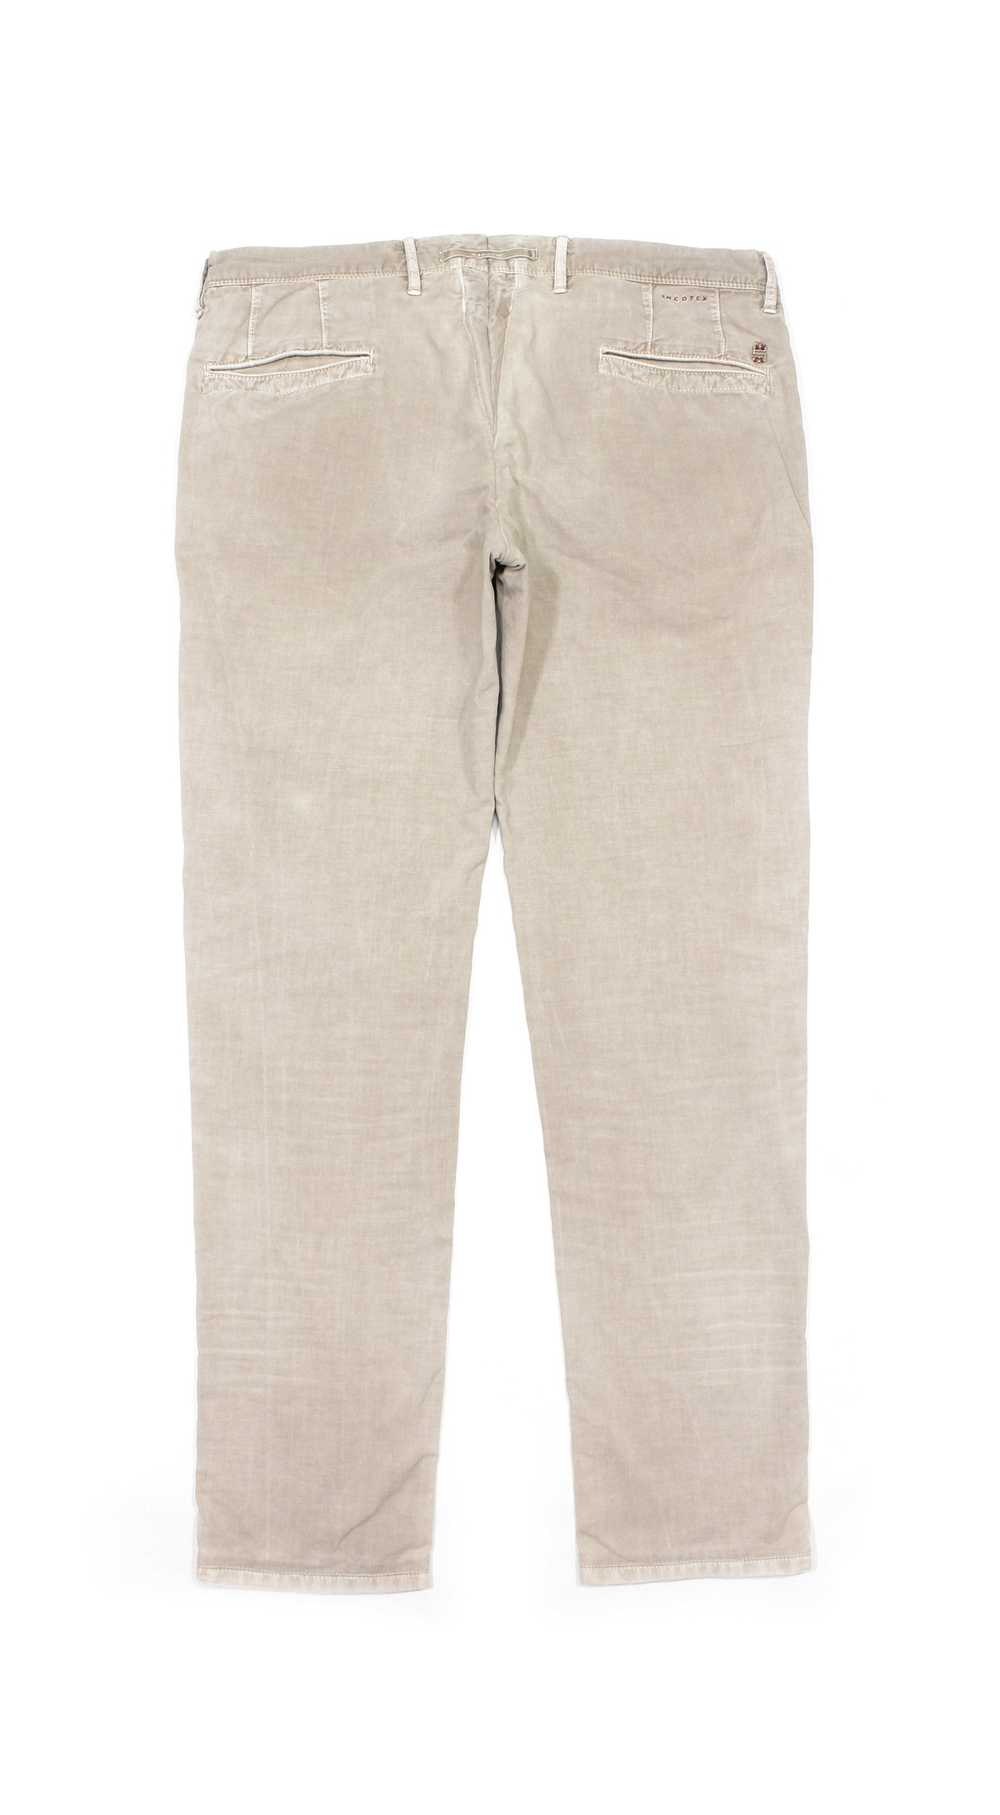 Incotex Slacks Faded Slim Fit Pants - image 2